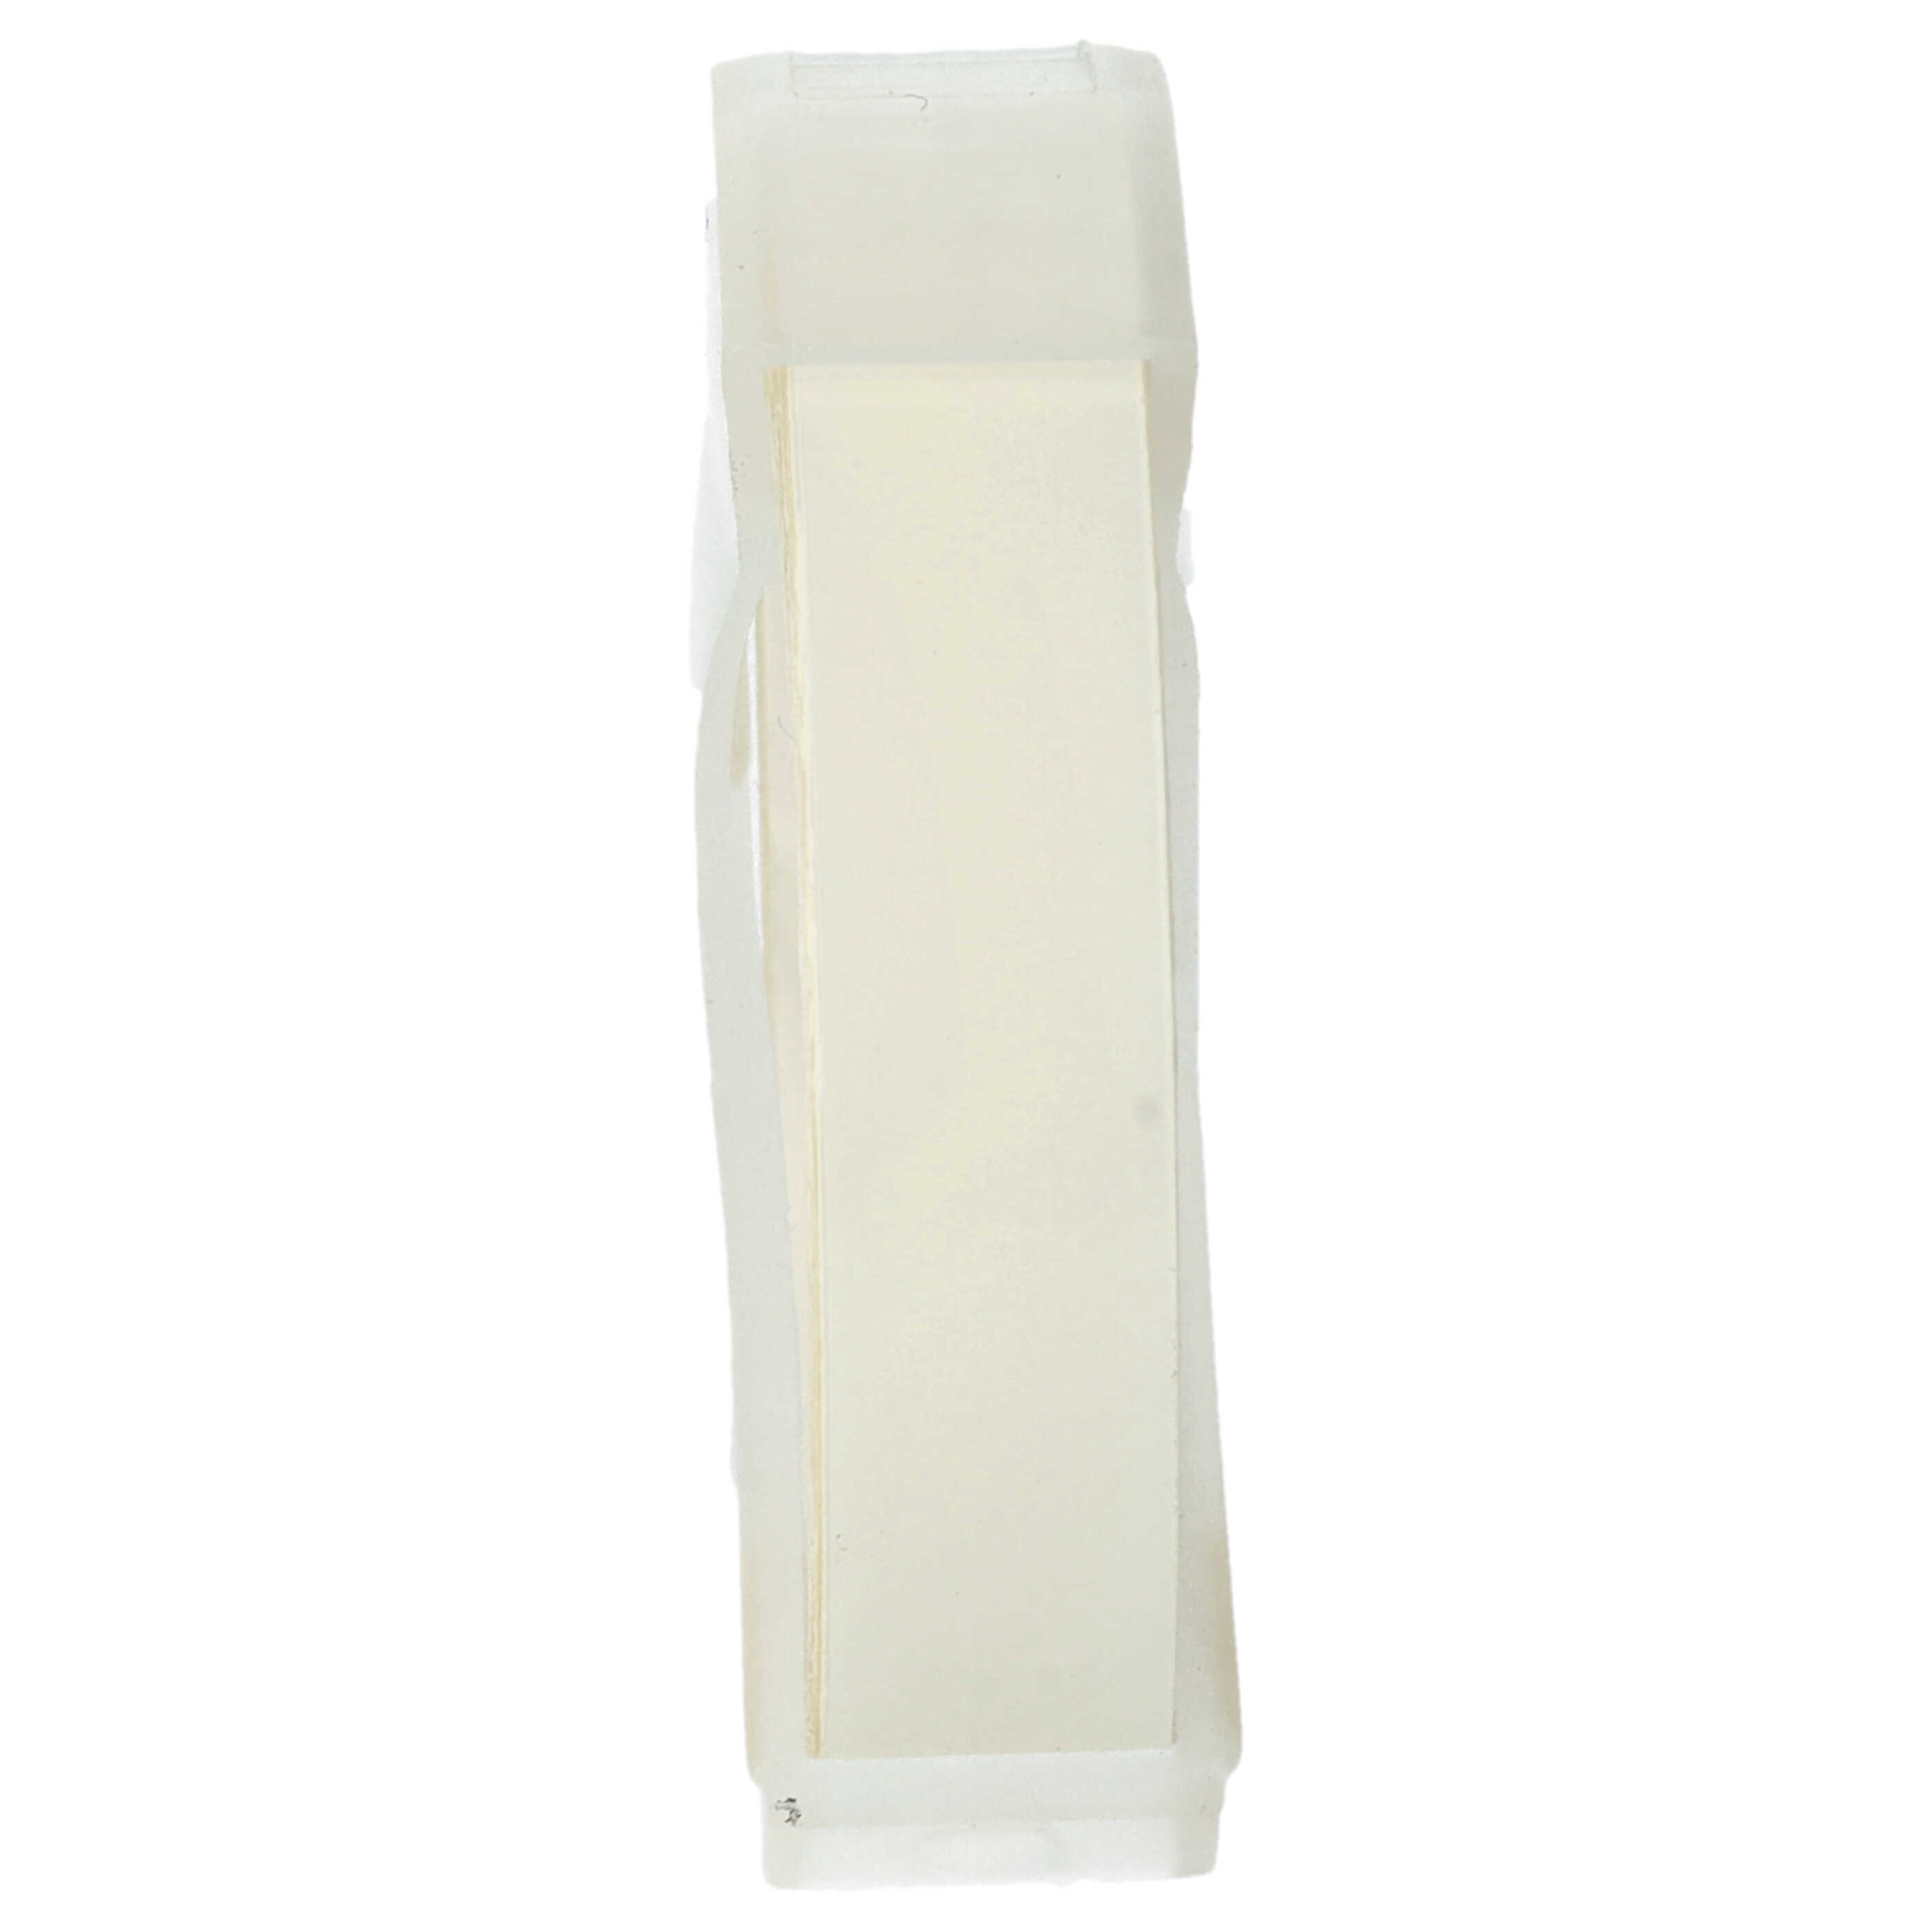 Casete cinta relieve 3D Casete cinta escritura reemplaza Dymo 0898100, 520101 Blanco su Transparente